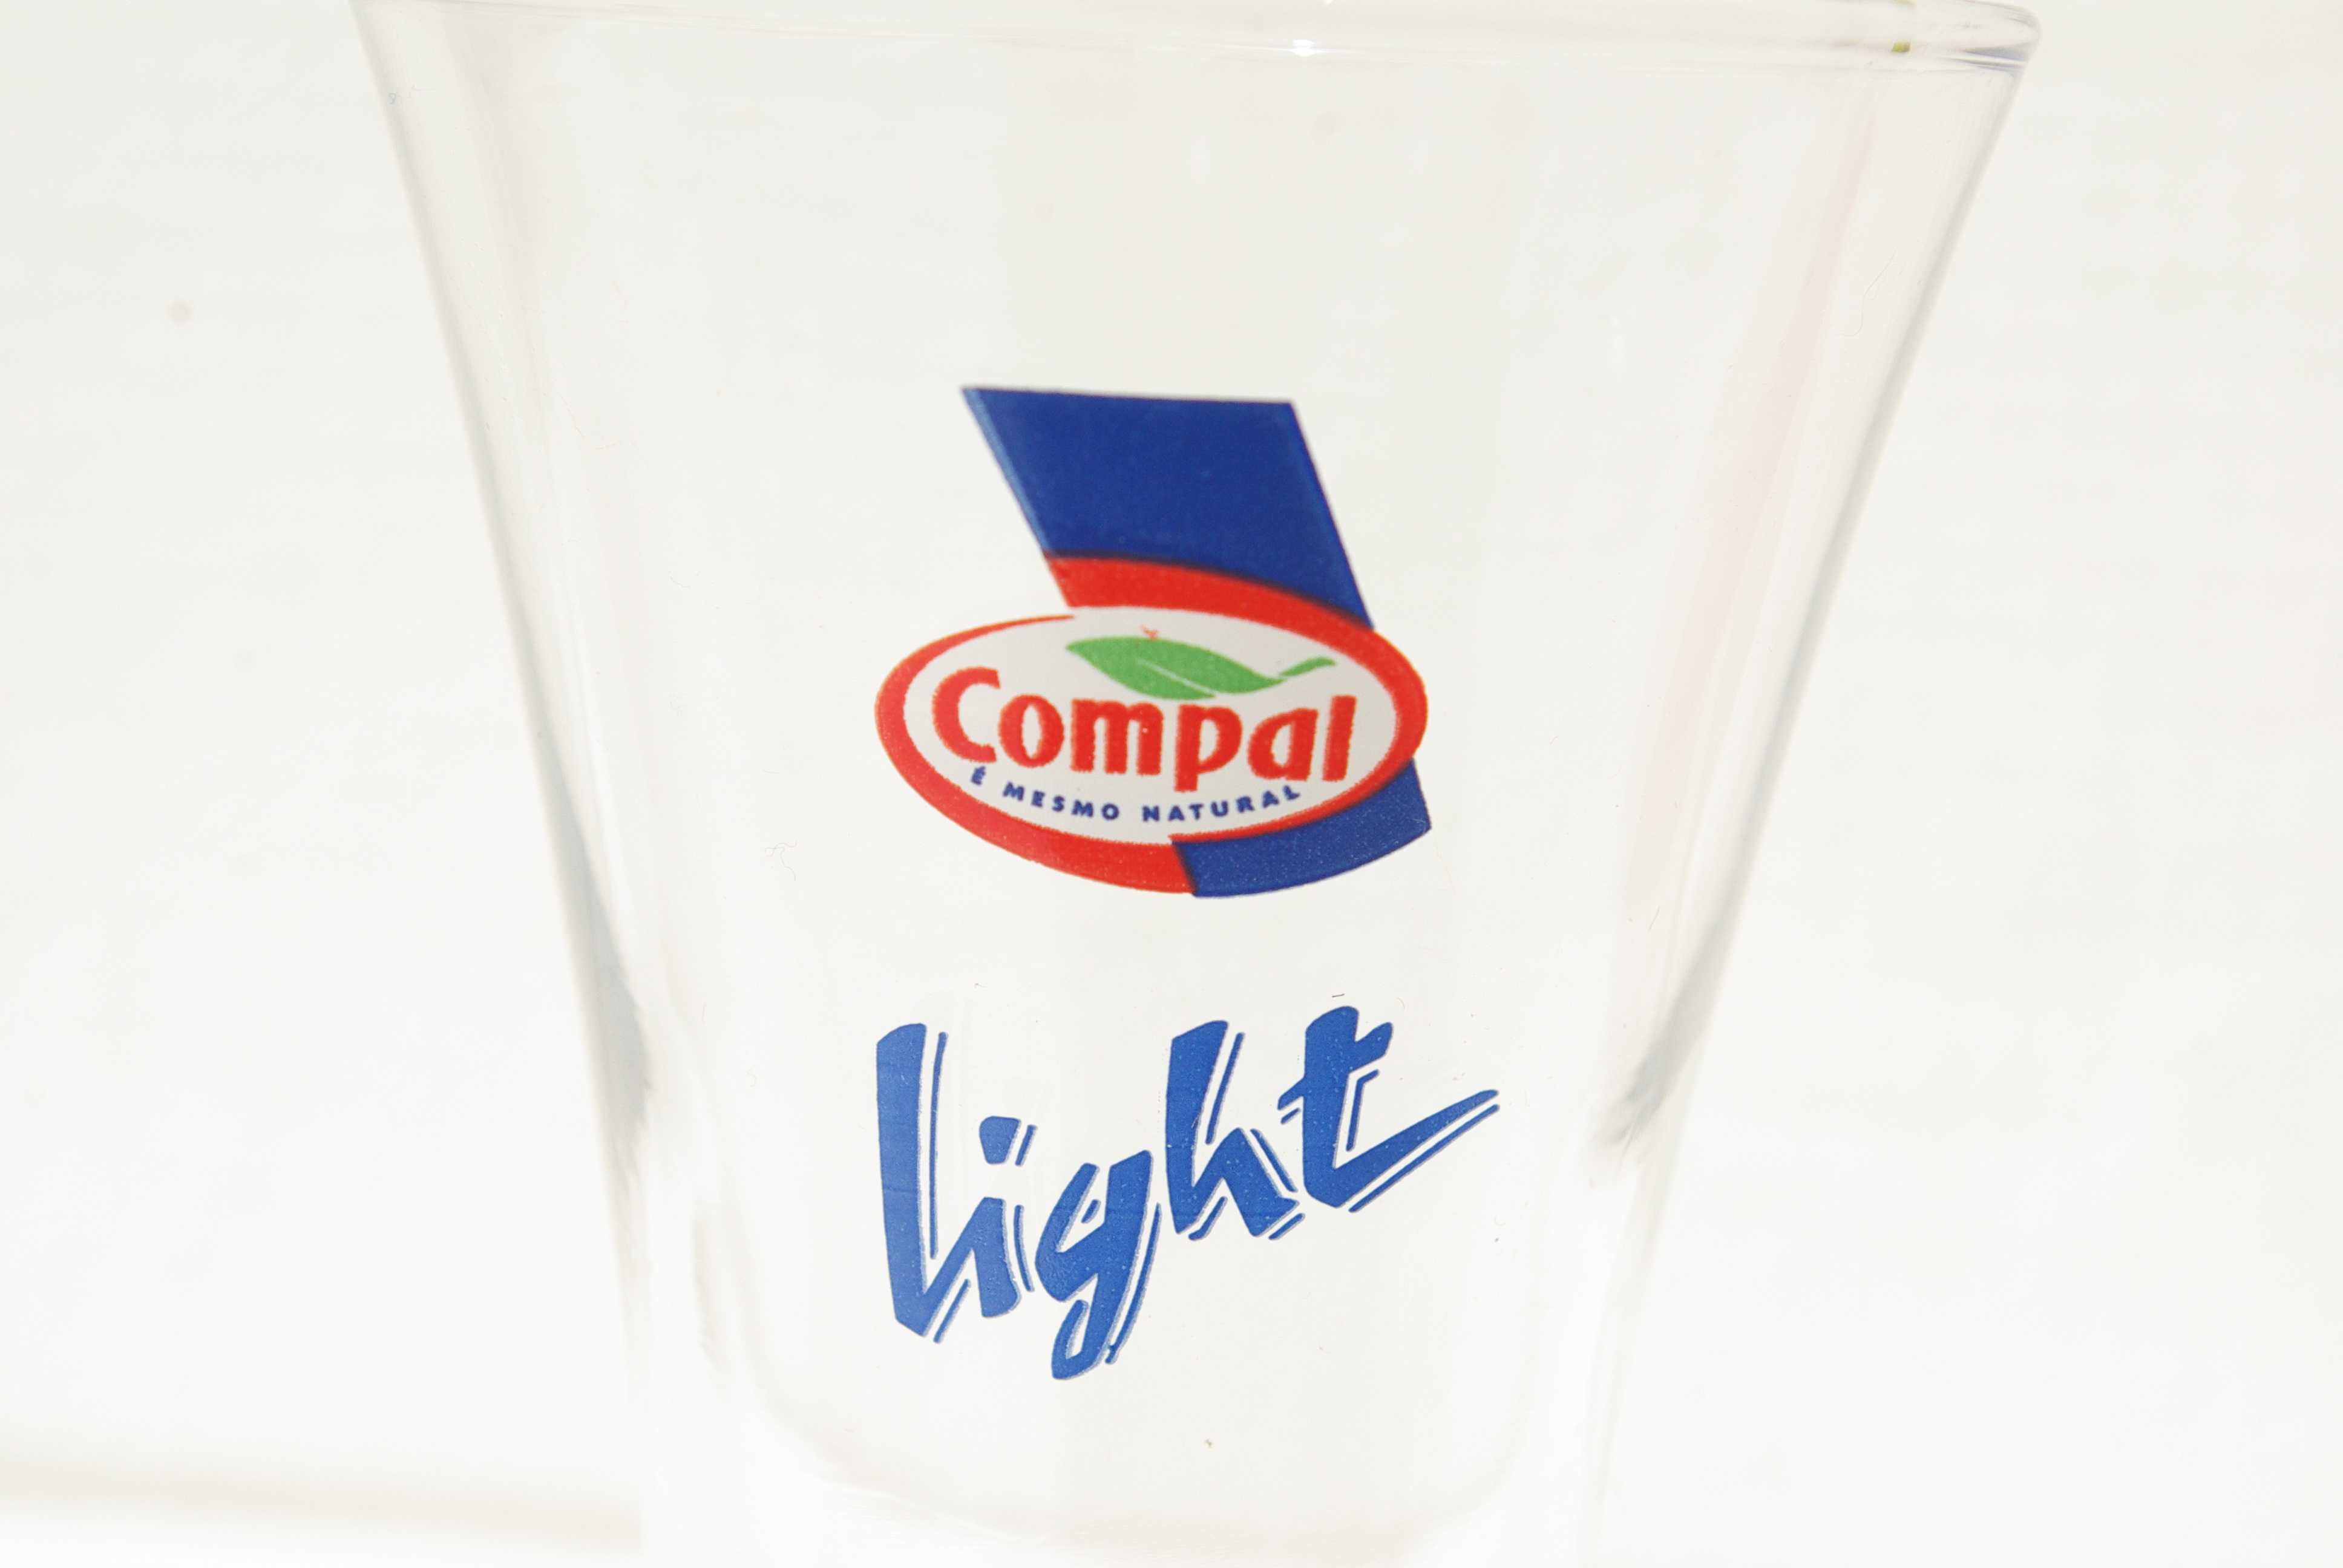 Copo Compal Light.